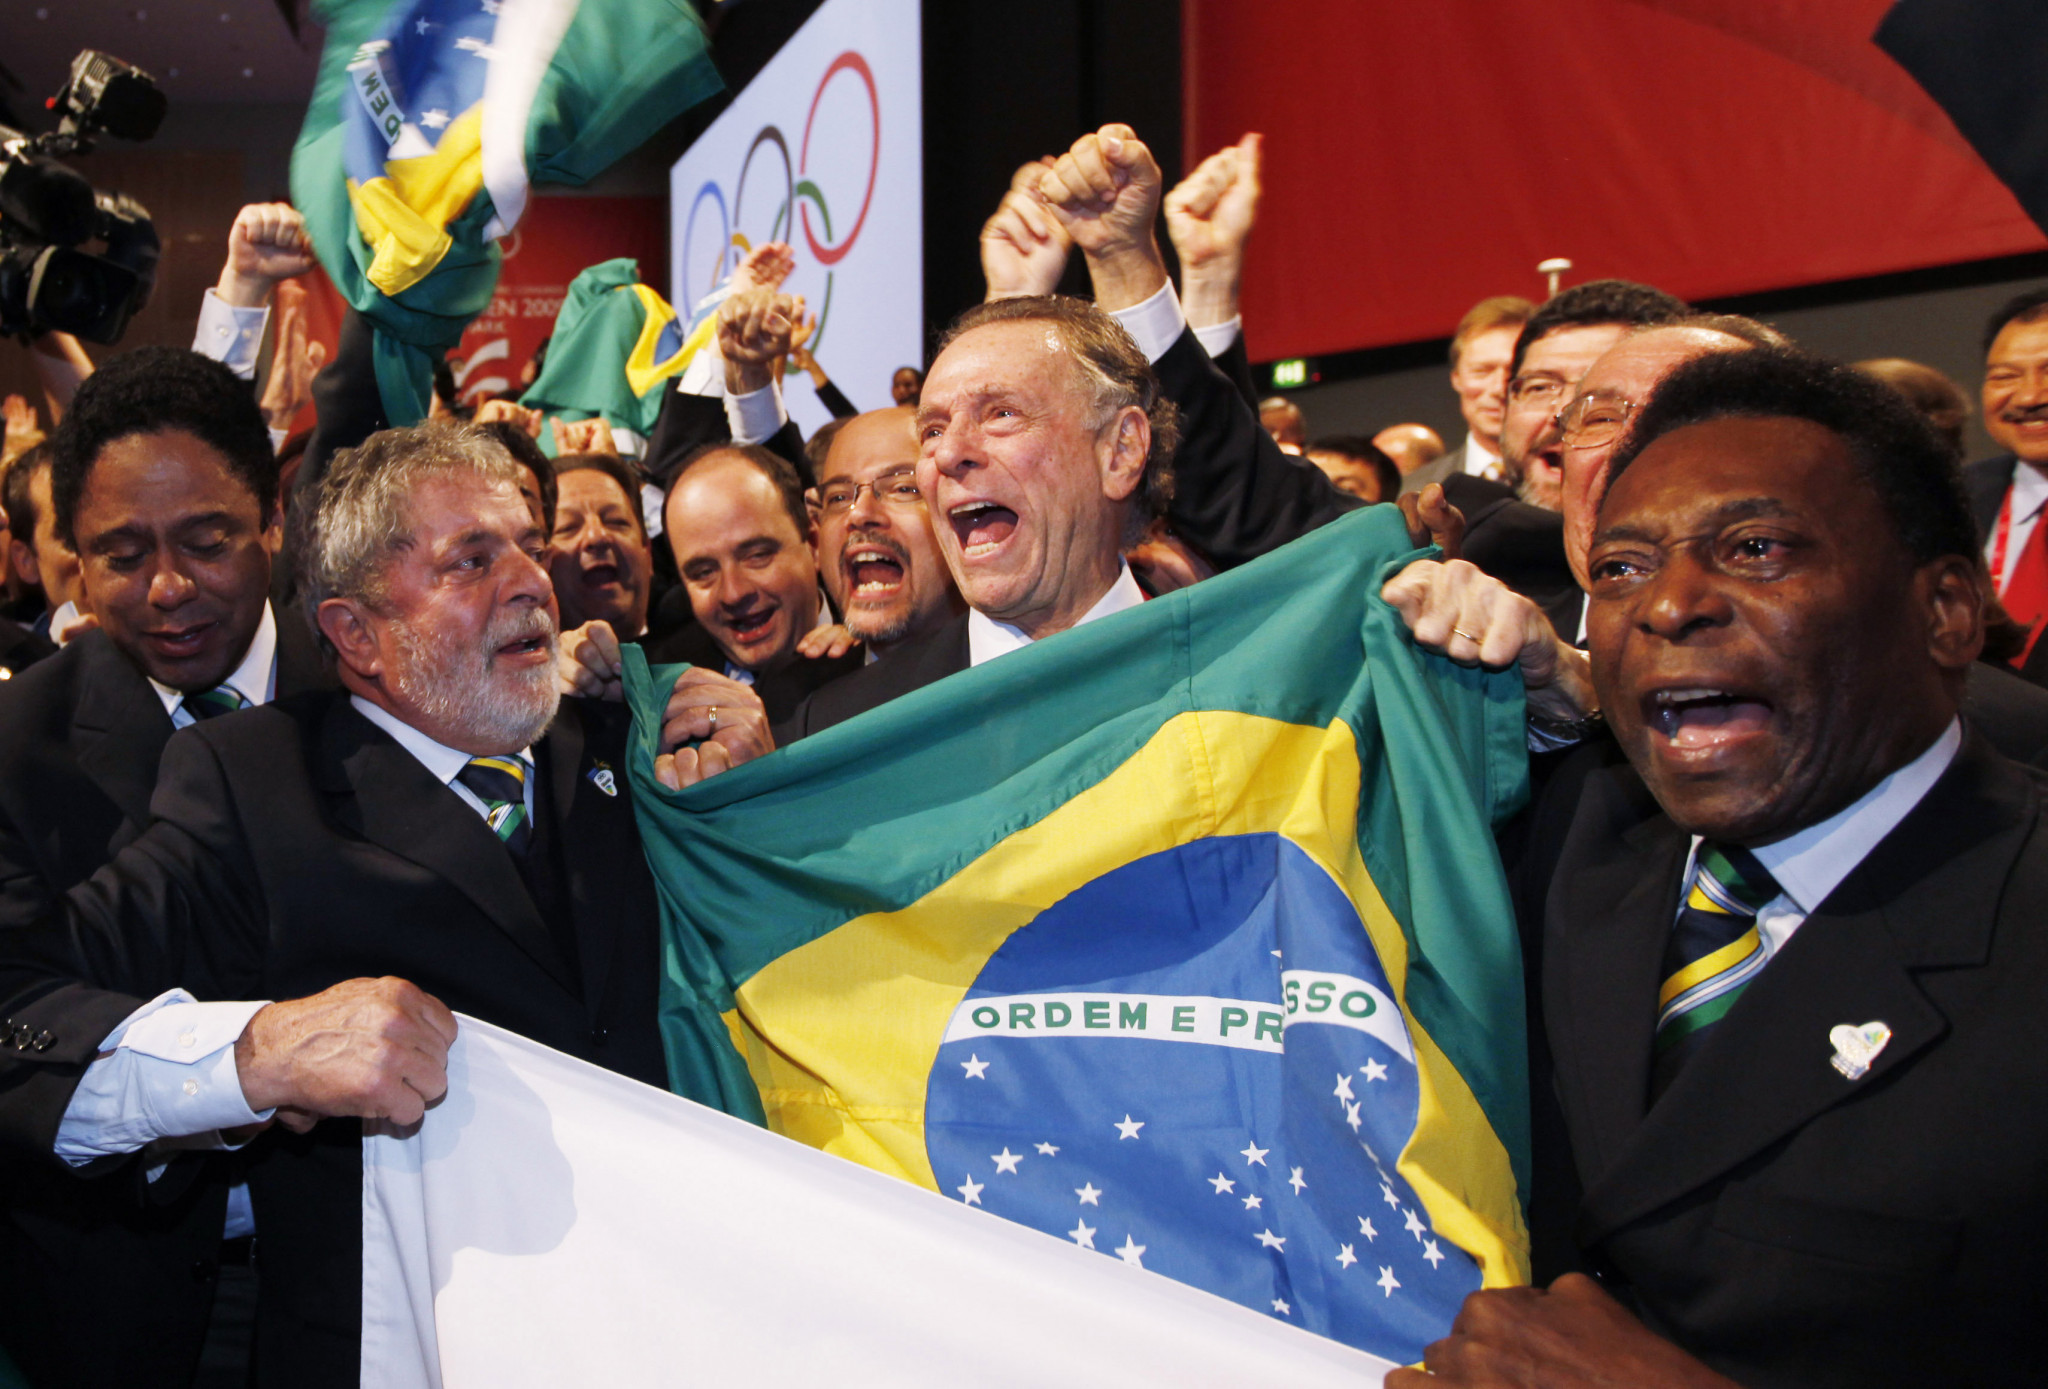 Pelé, right, pictured celebrating with figures including Carlos Nuzman and then-Brazilian President Luiz Inacio Lula da Silva when Rio was awarded the Olympics in Copenhagen in 2009 ©Getty Images